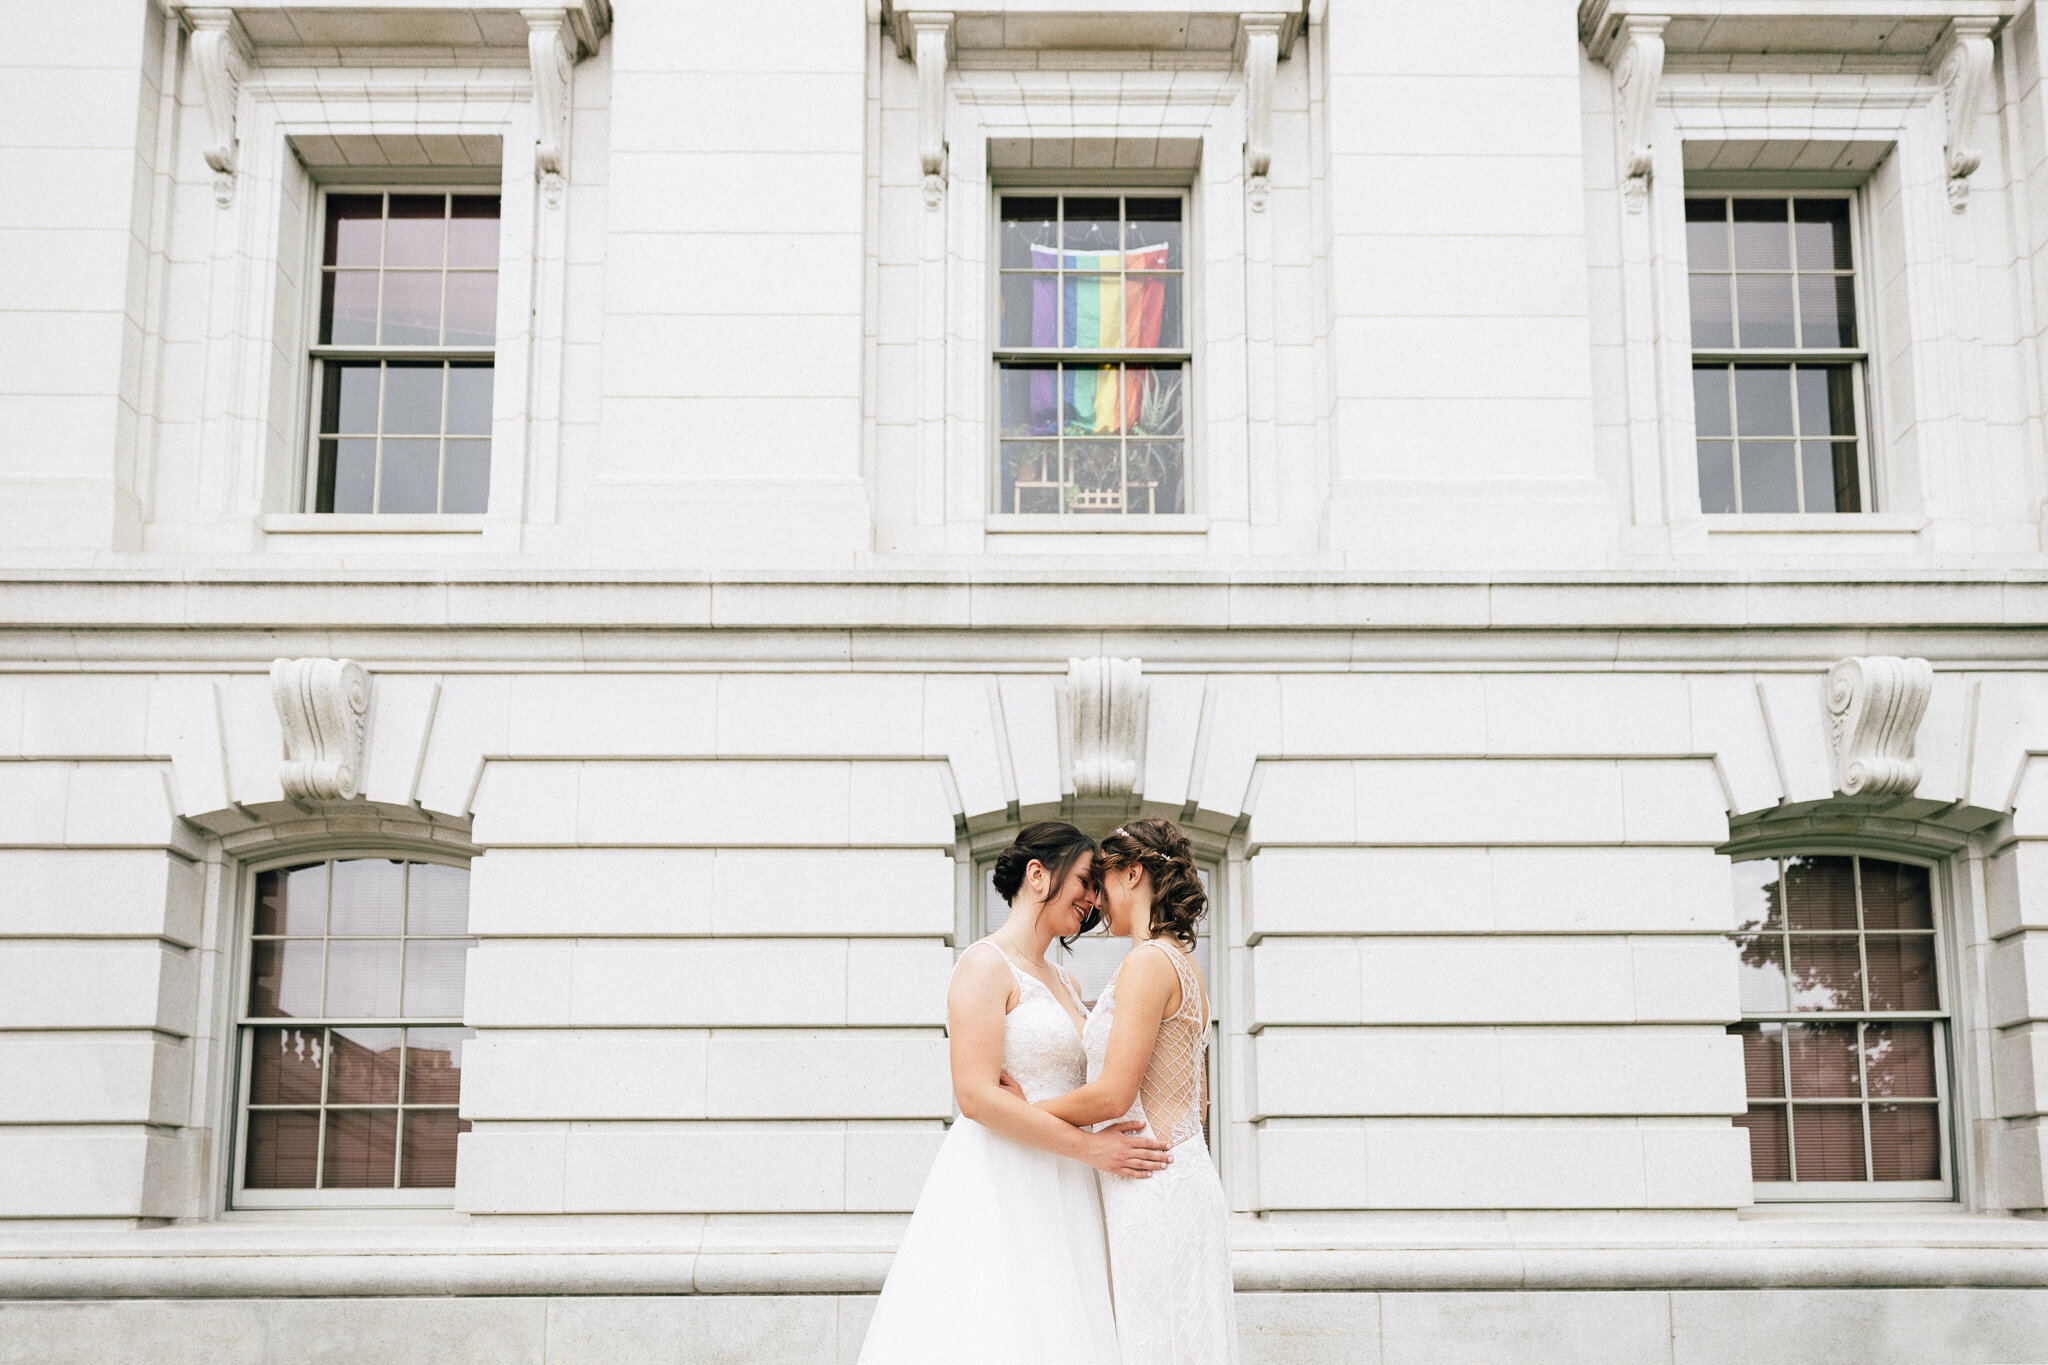 Natalea & Laura's Wedding - 6.11.2022 - Anna Katherine Photography (1 of 8)